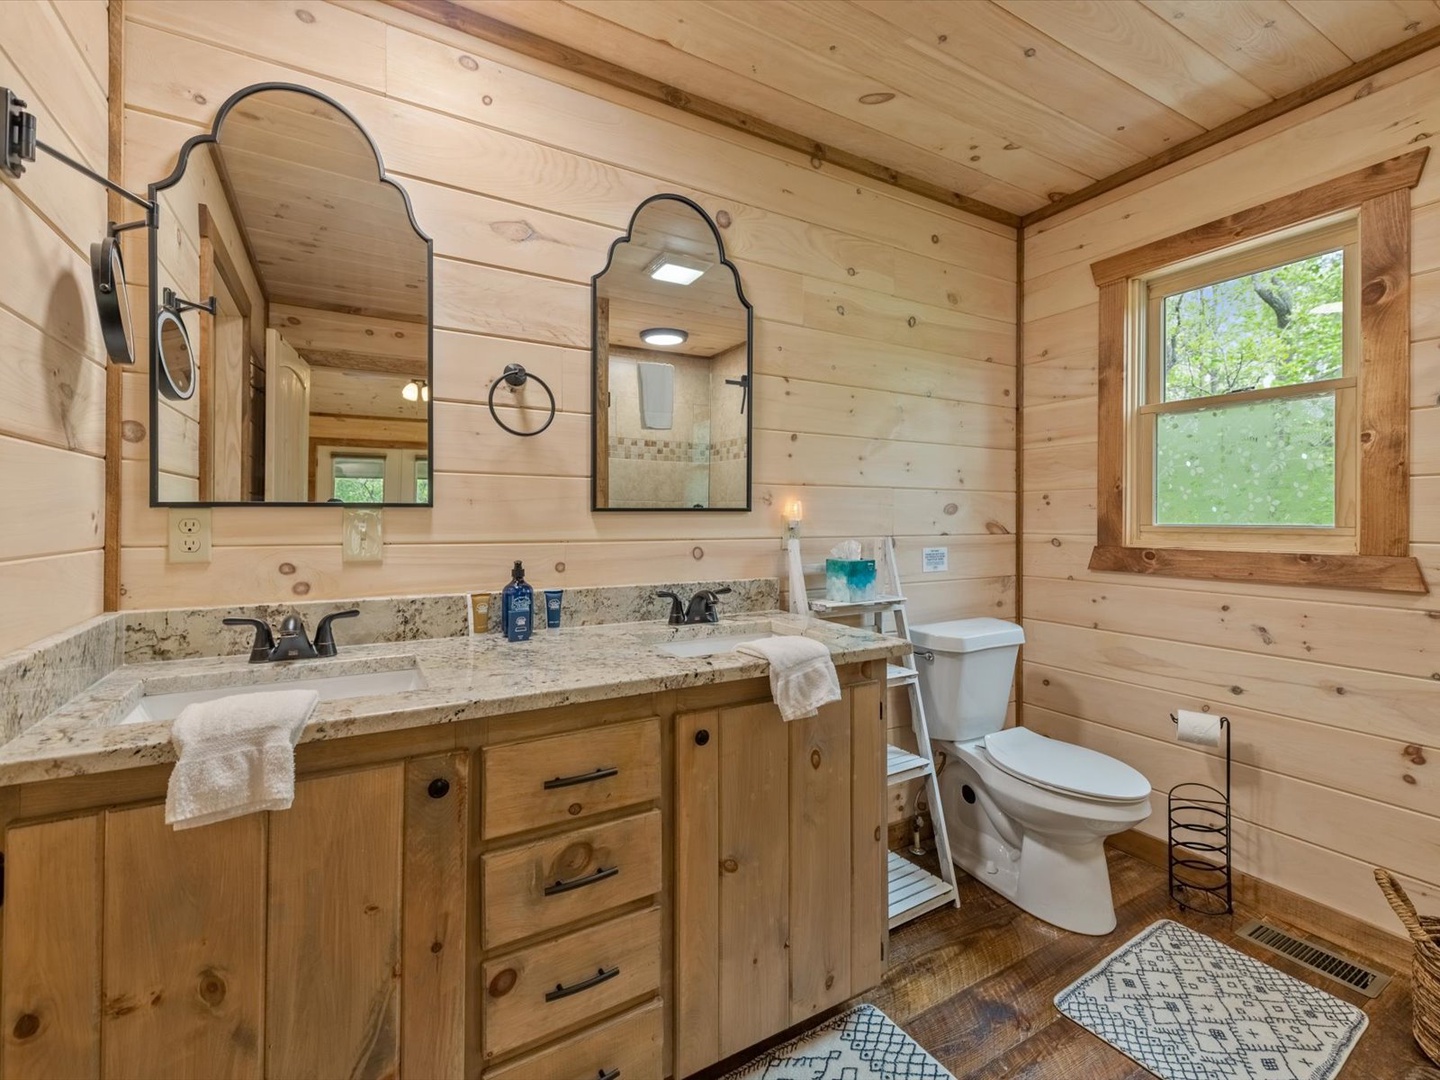 Fern Creek Hollow Lodge - Upper Level Primary King Bedroom's Bathroom